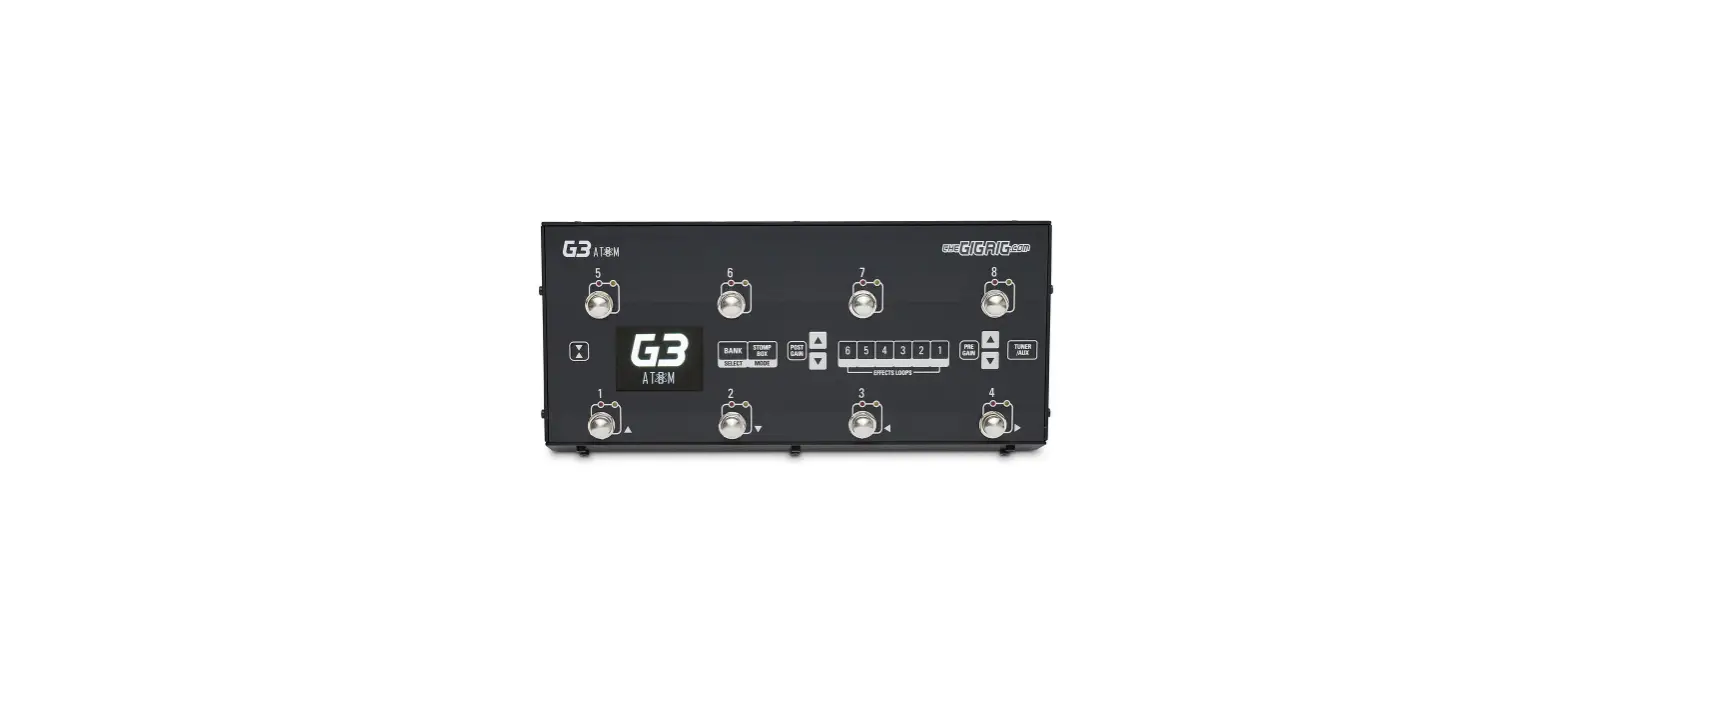 G3 ATOM Switching System